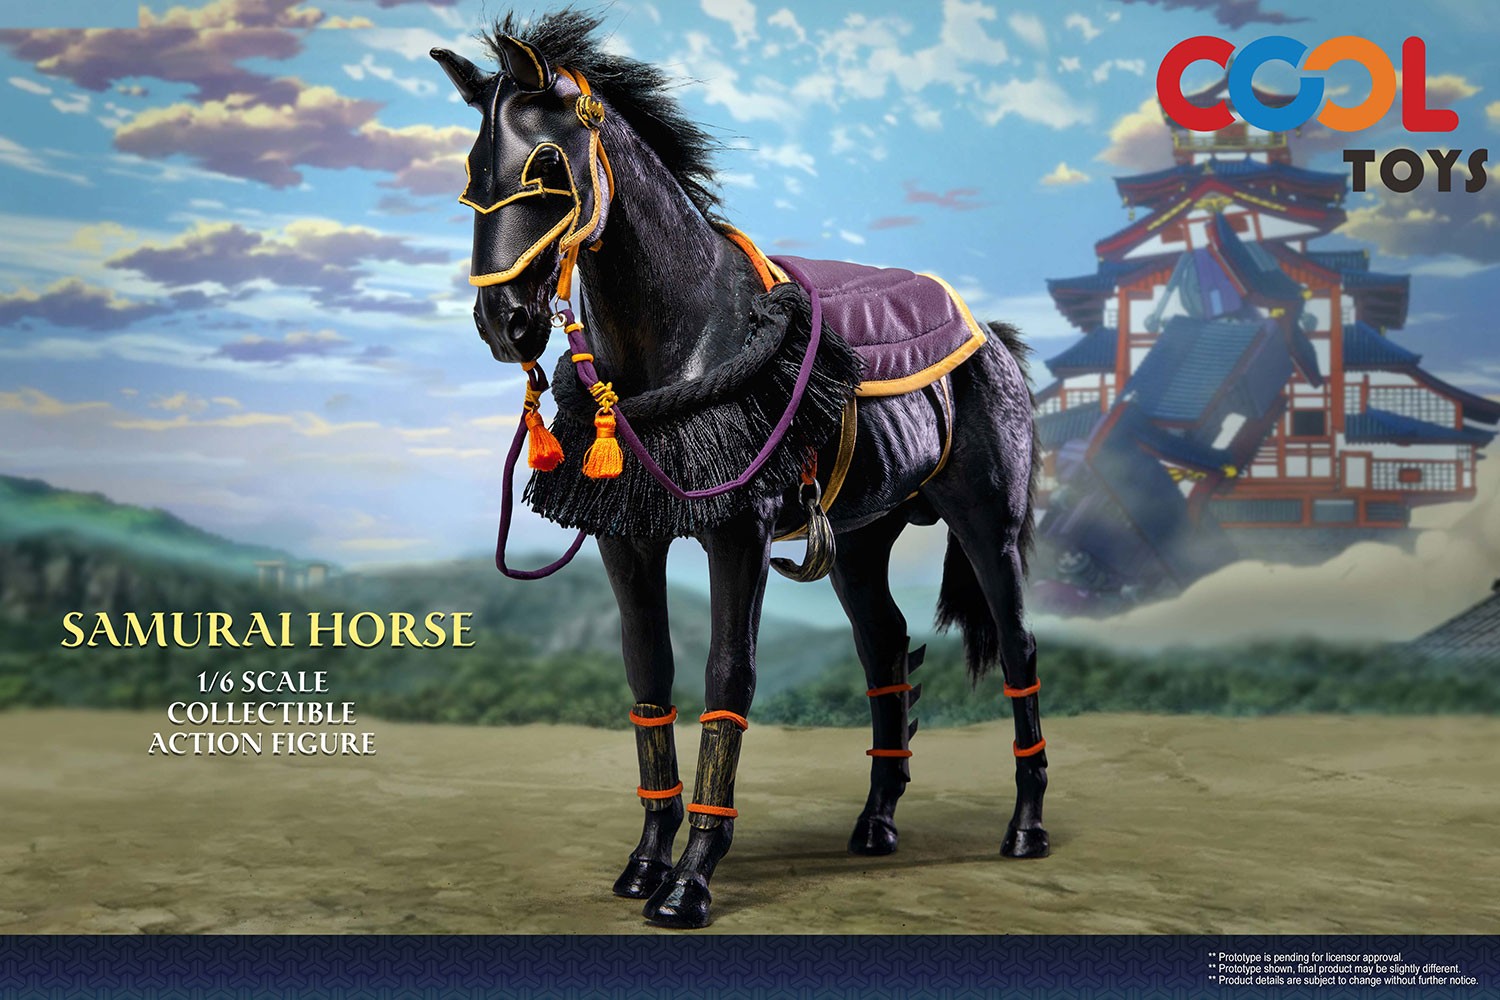 Samurai Horse- Prototype Shown